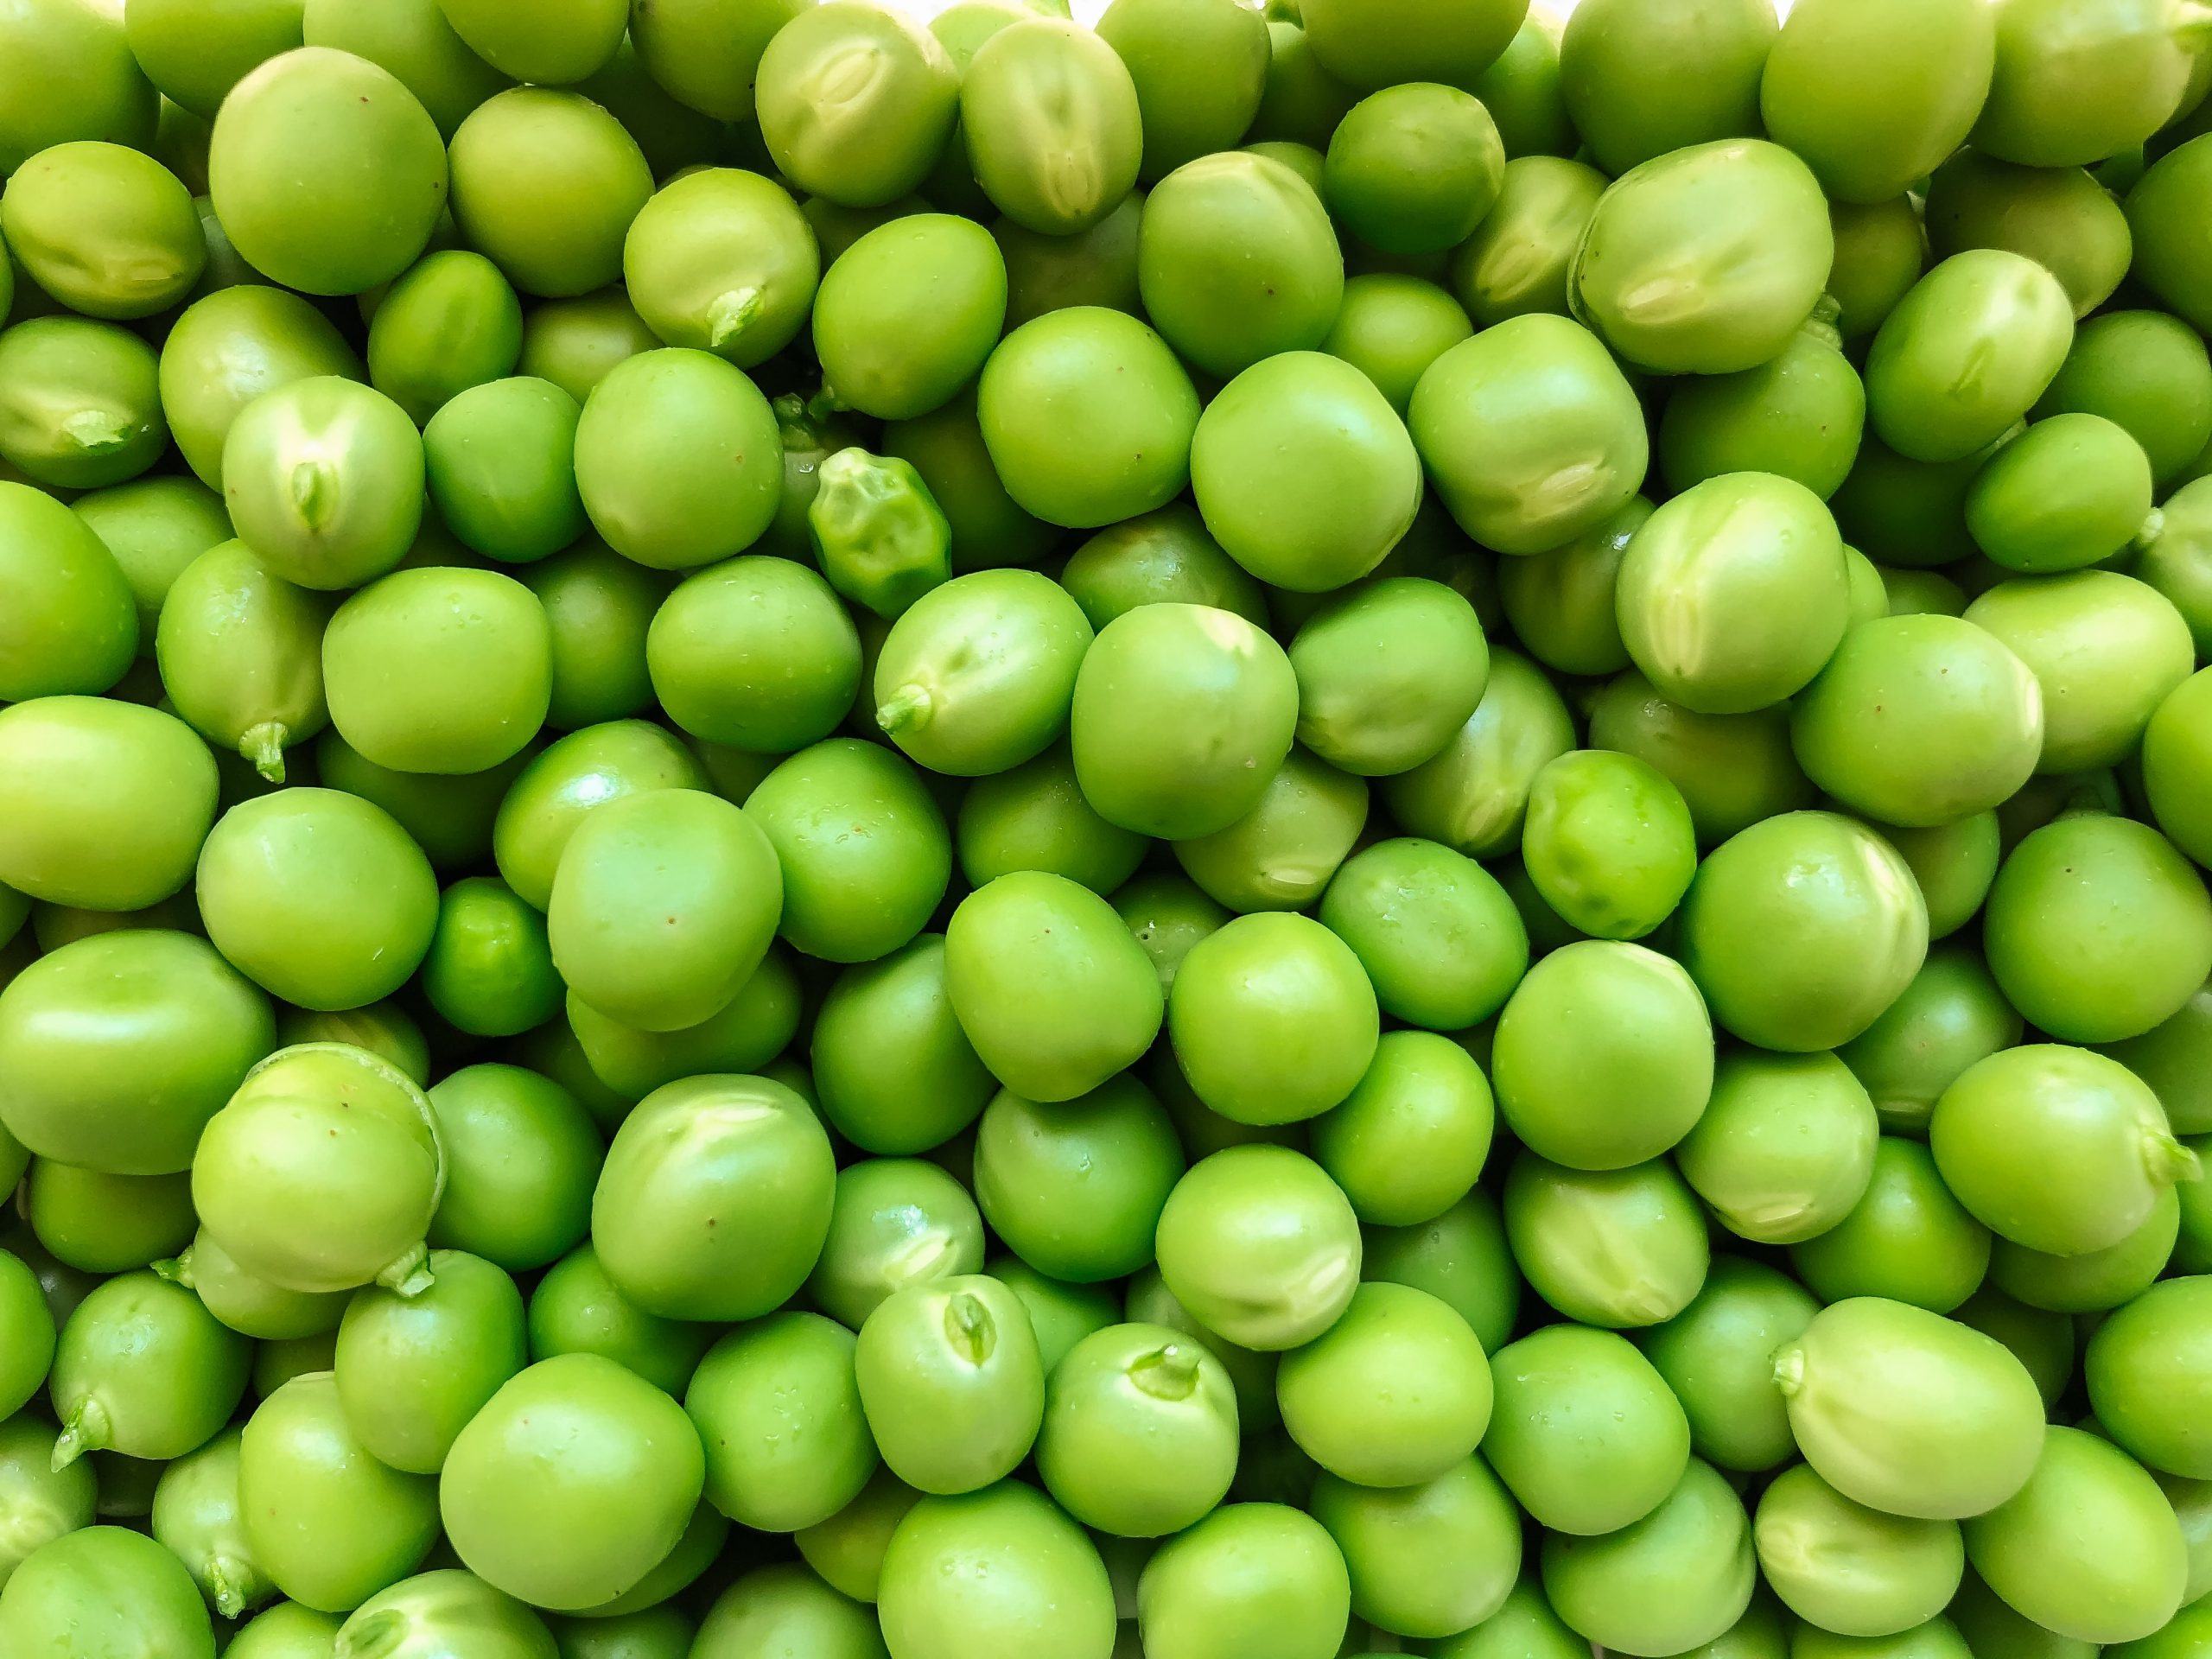 How Many Peas Will One Plant Produce?